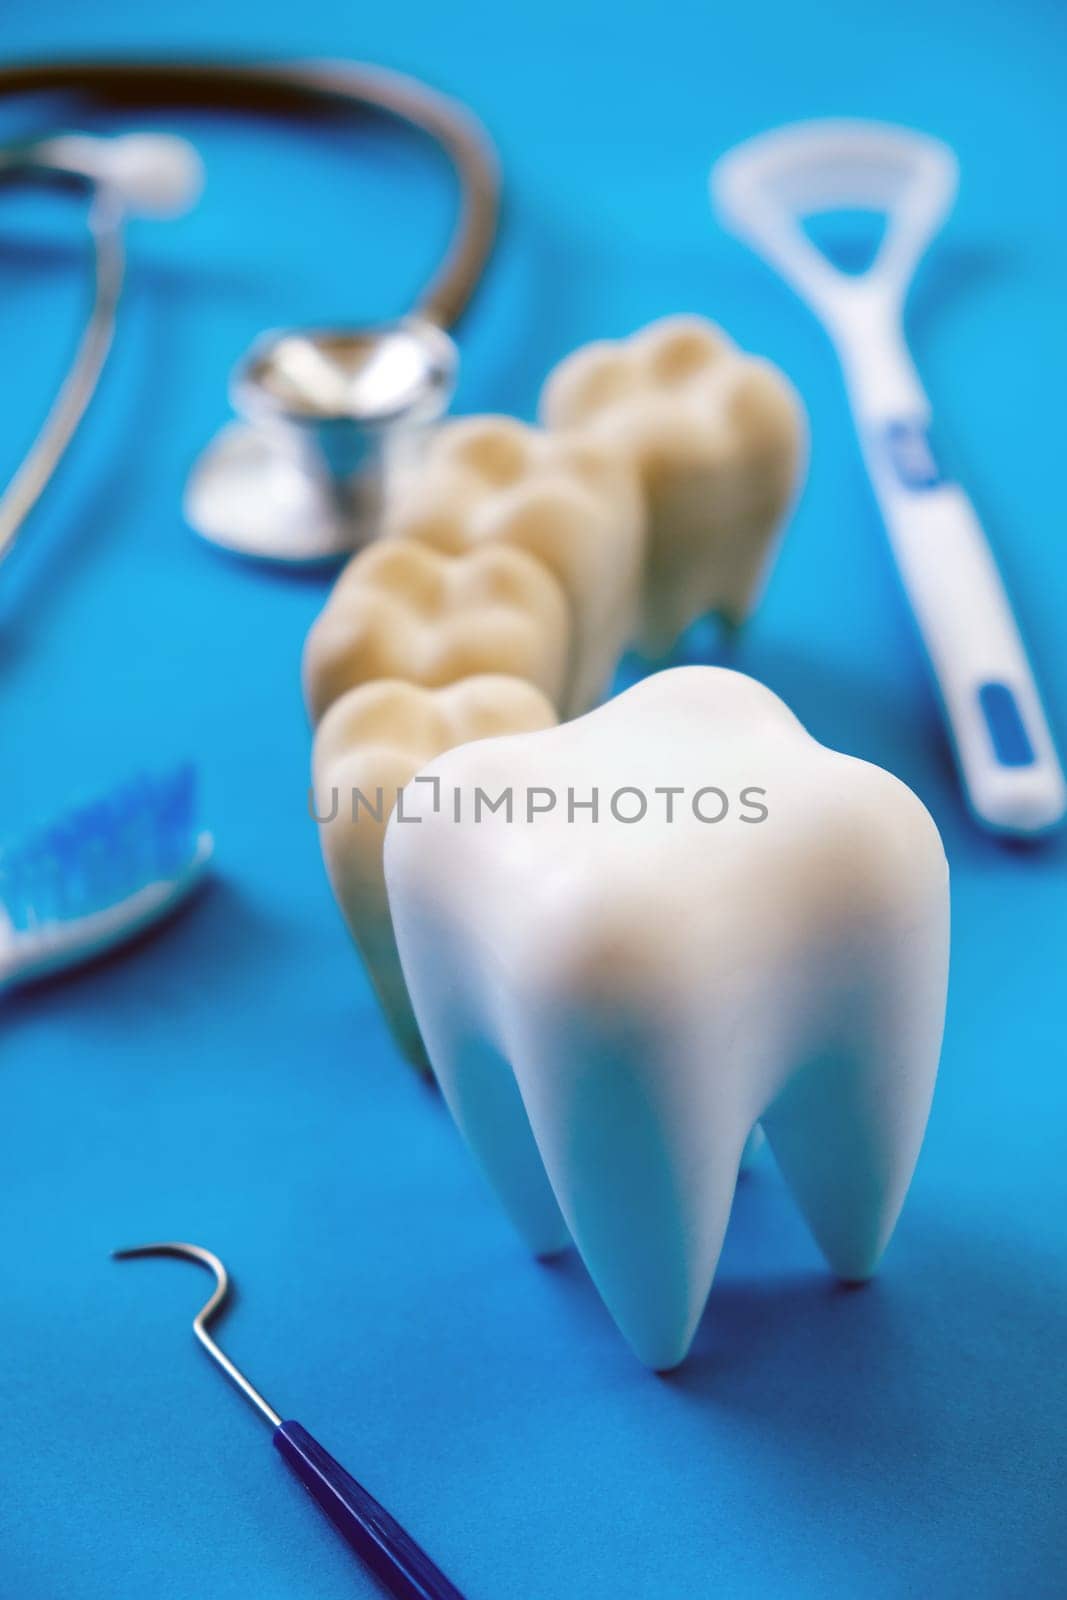 Dental model and dental equipment on blue background, Dentistry concept.